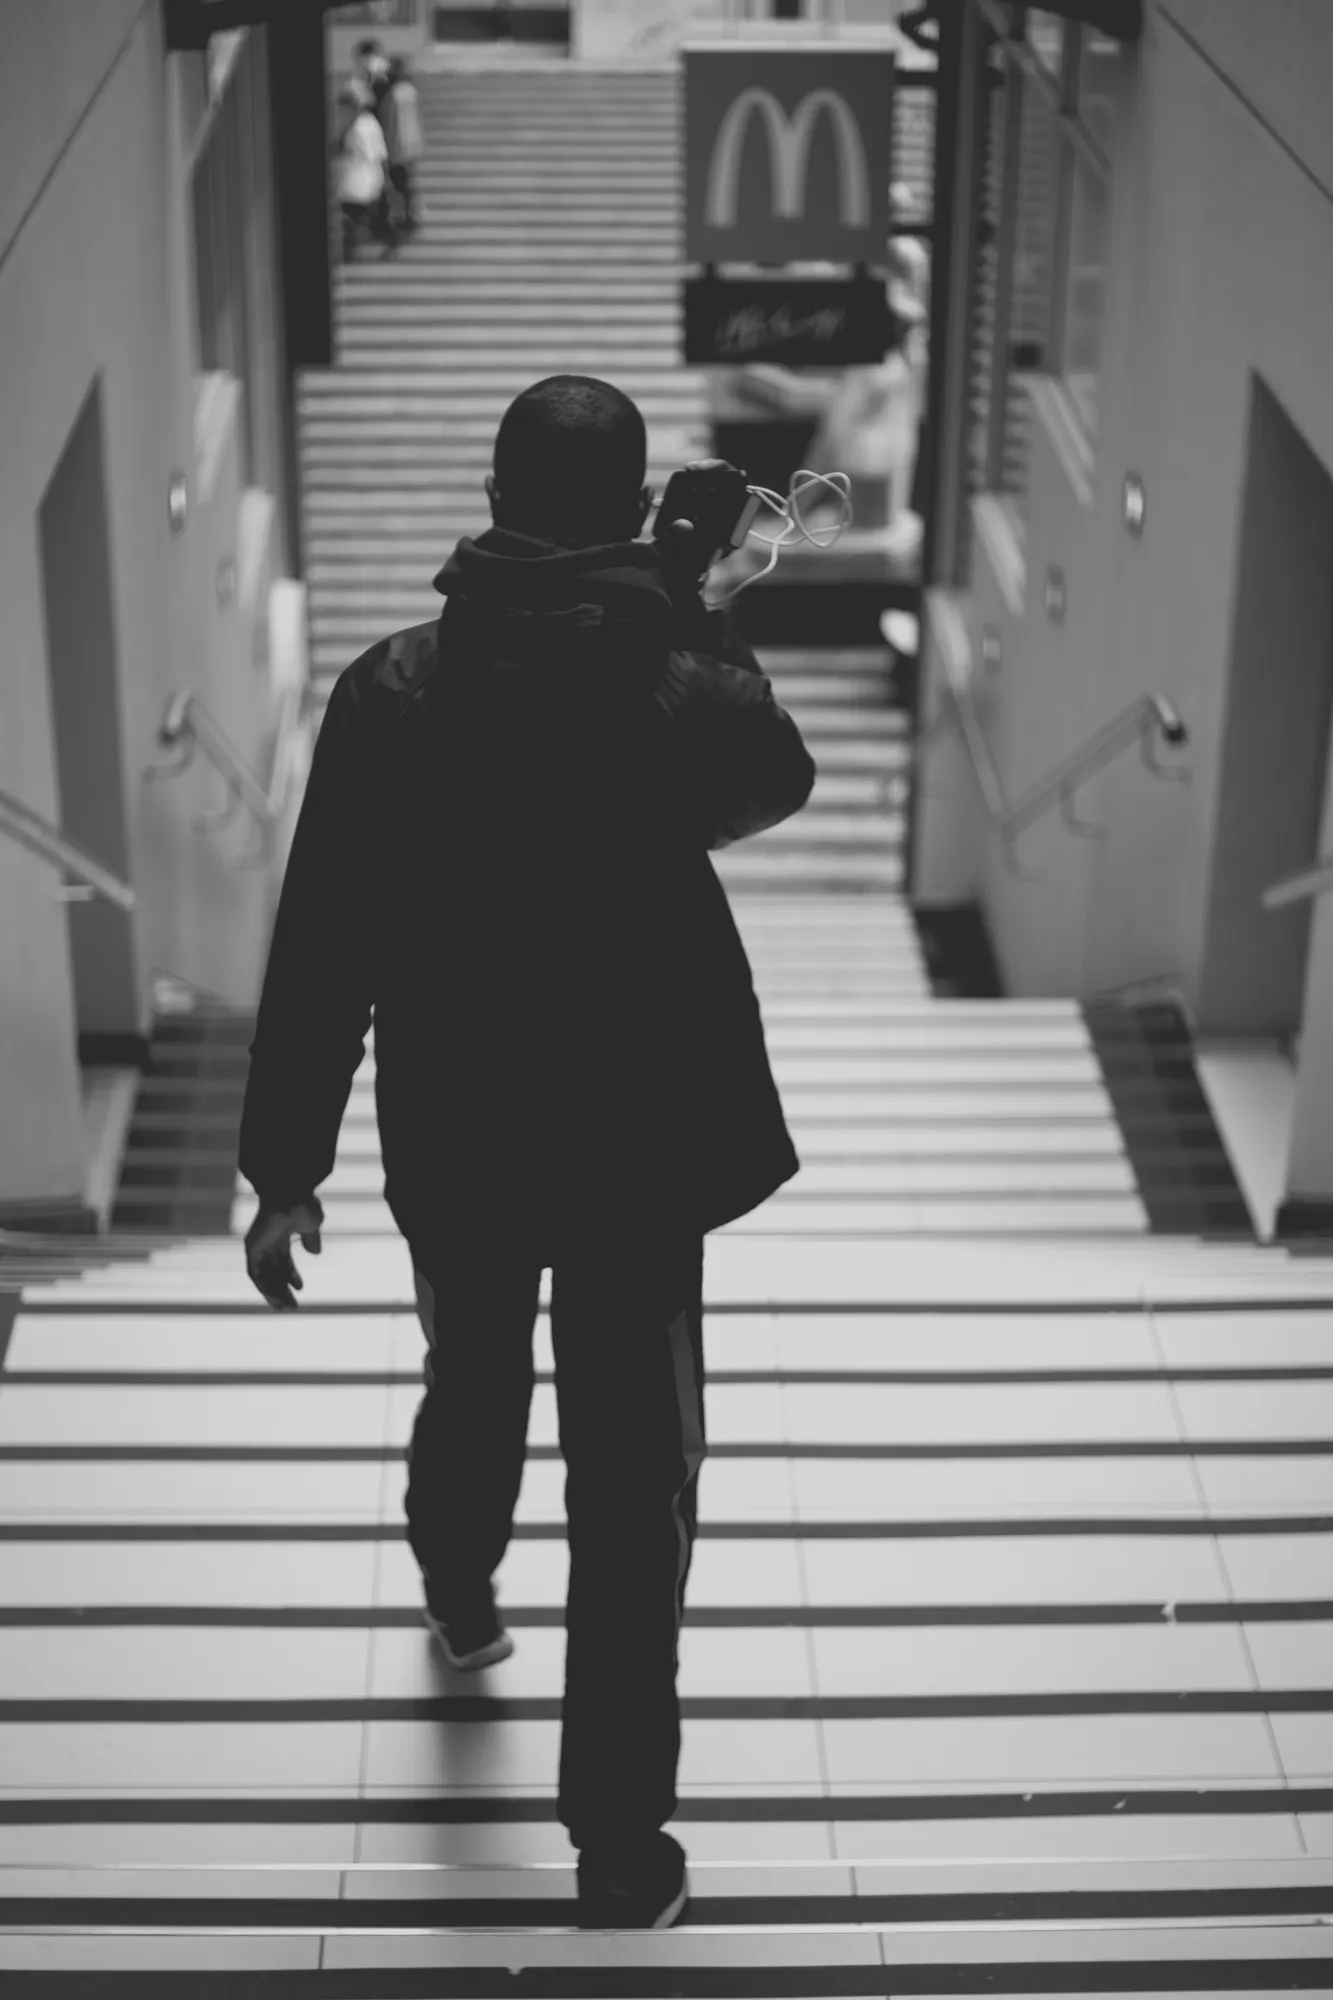 2021-12-19 - Rosebank, Johannesburg - Man walking down stairs